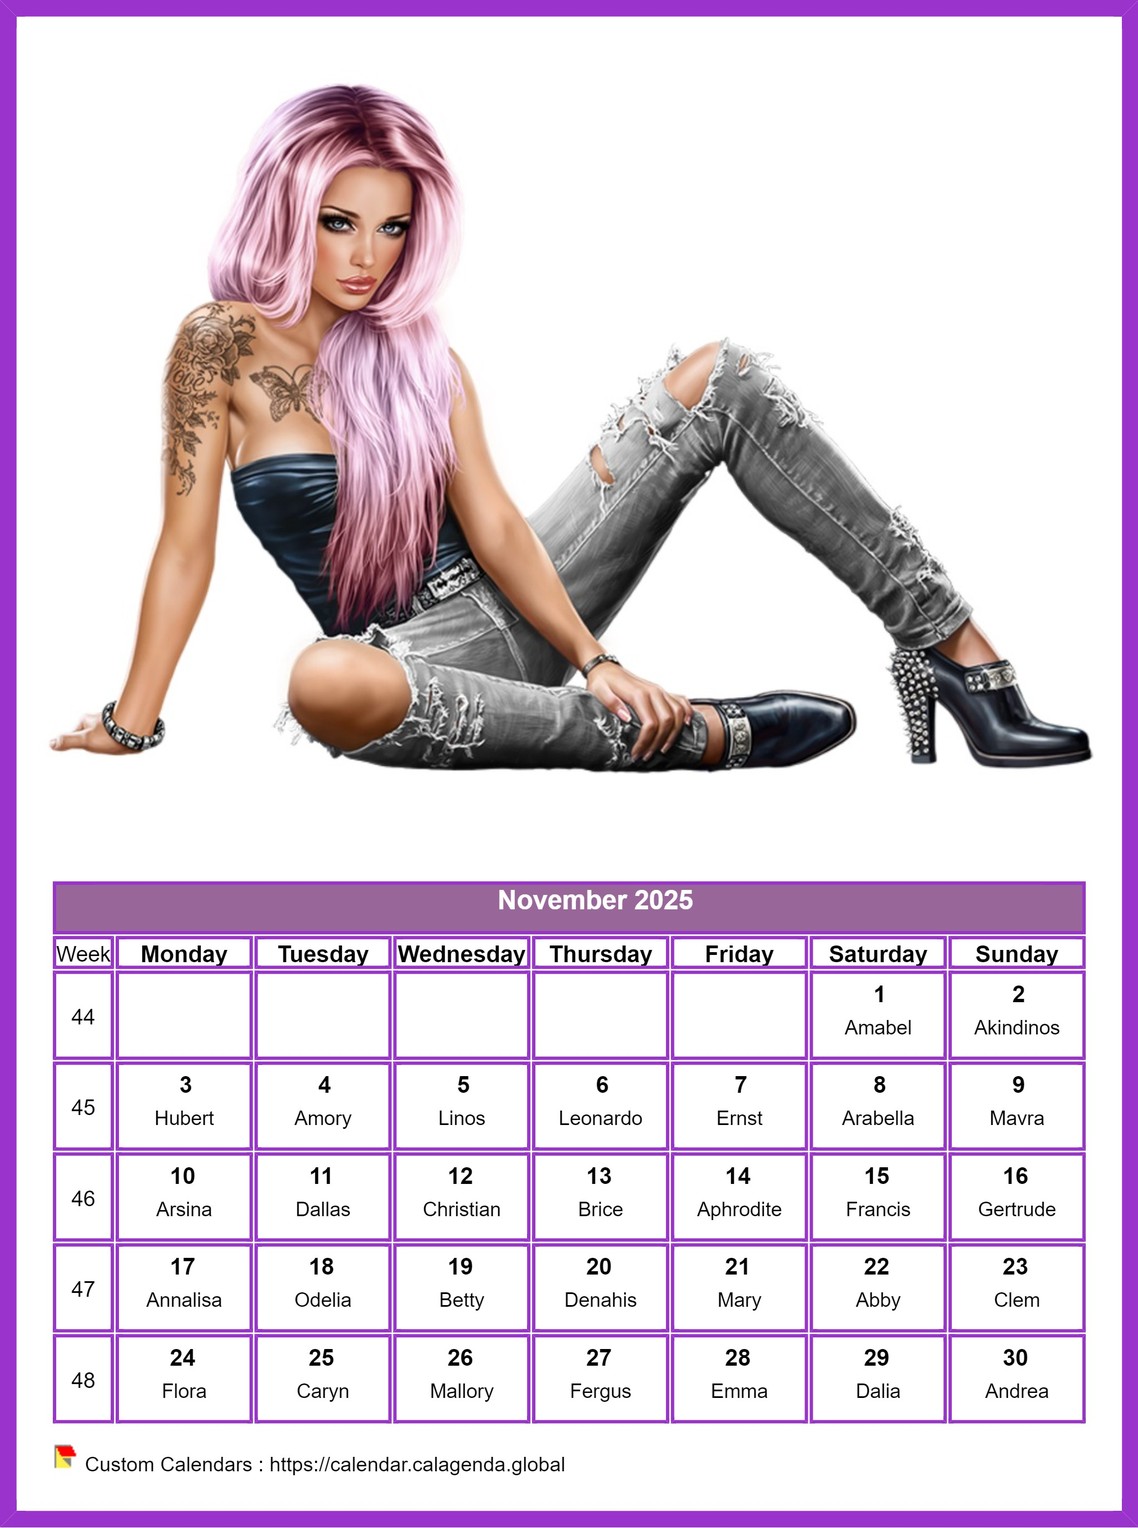 Calendar November 2025 women